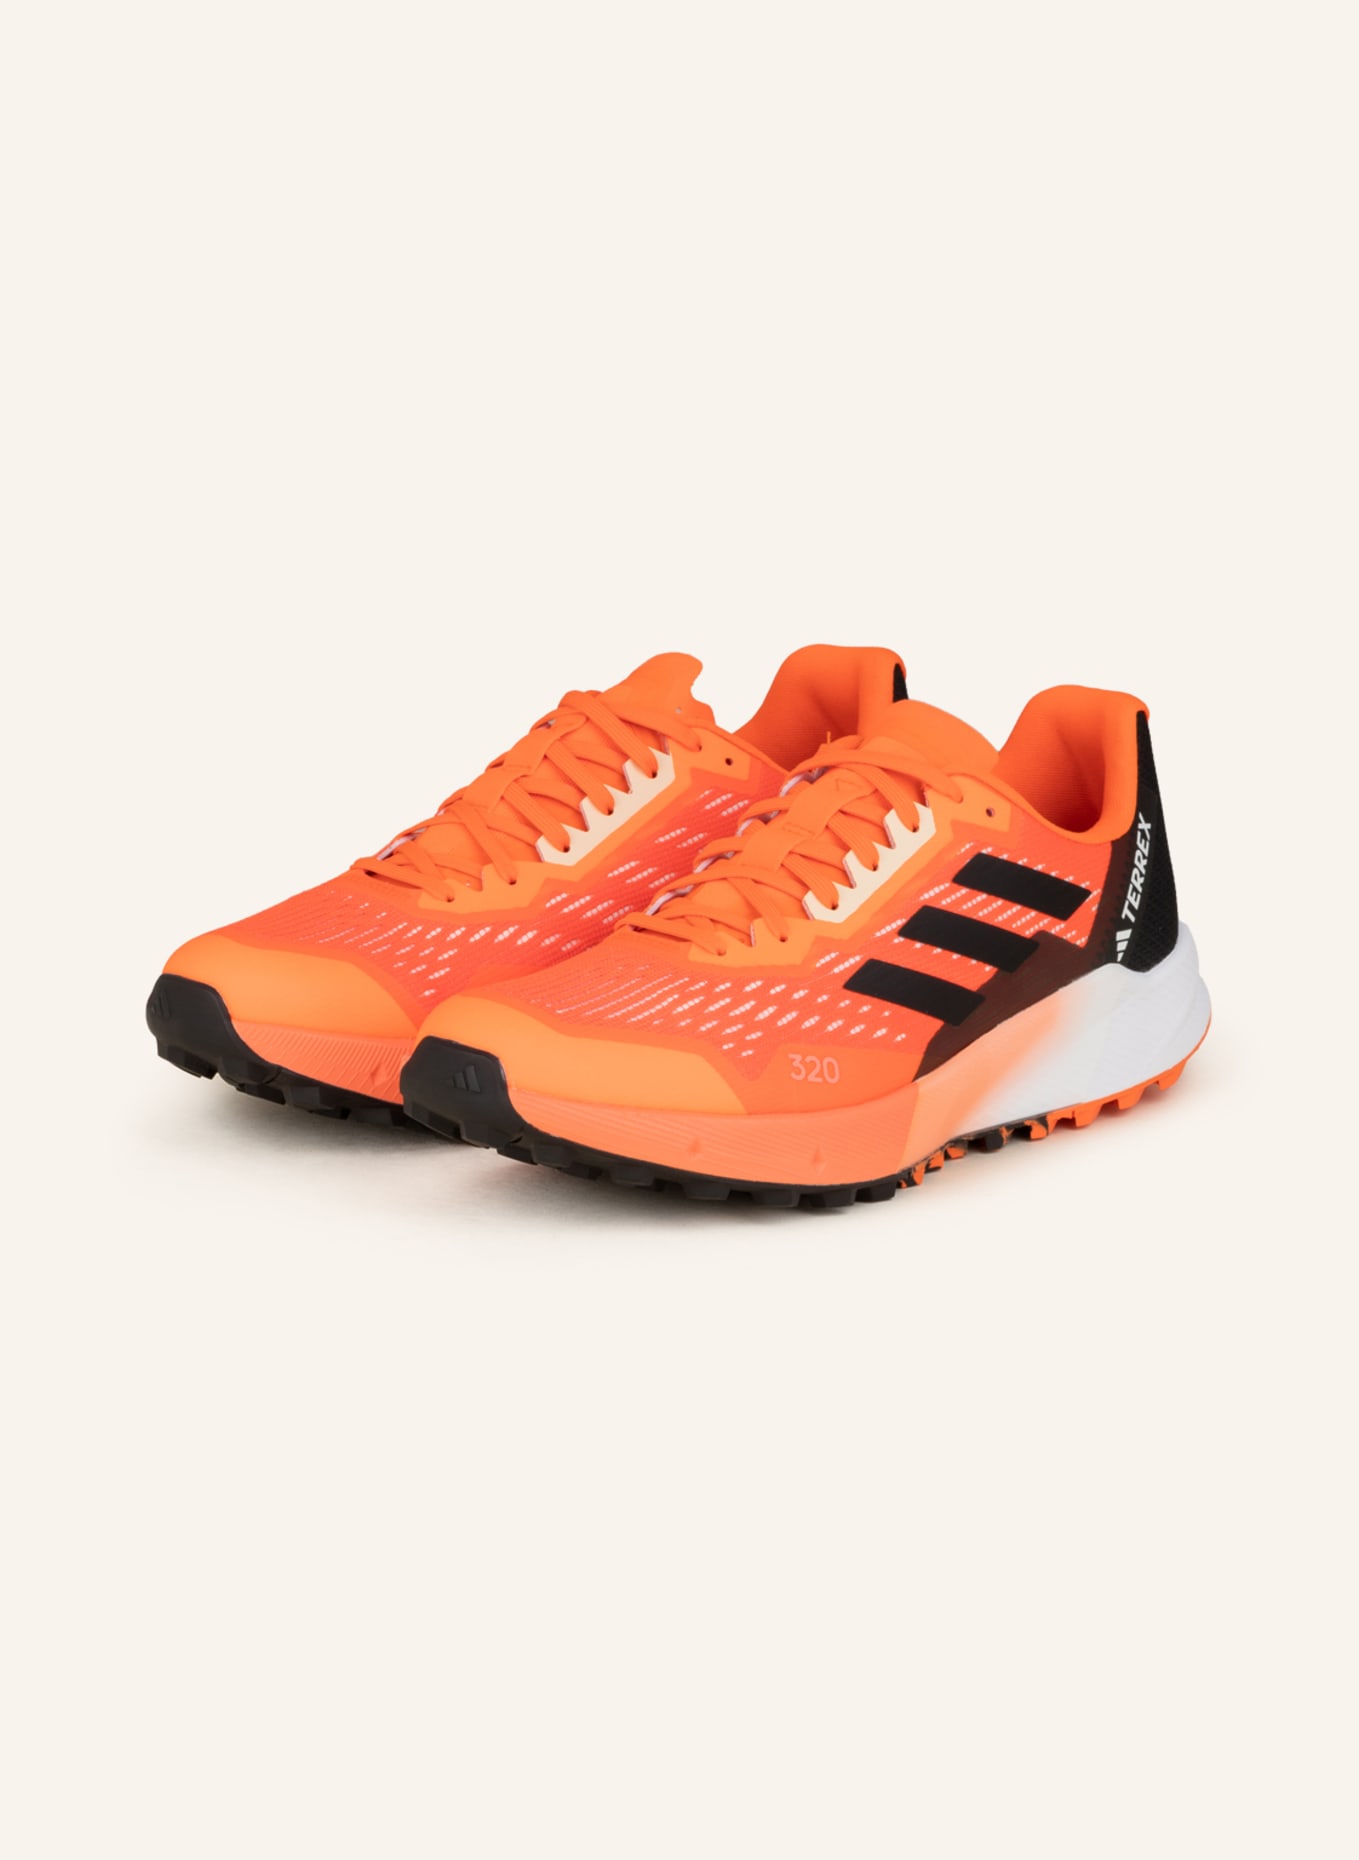 adidas | Shoes | Adidas Neon Pink Tennis Shoes | Poshmark